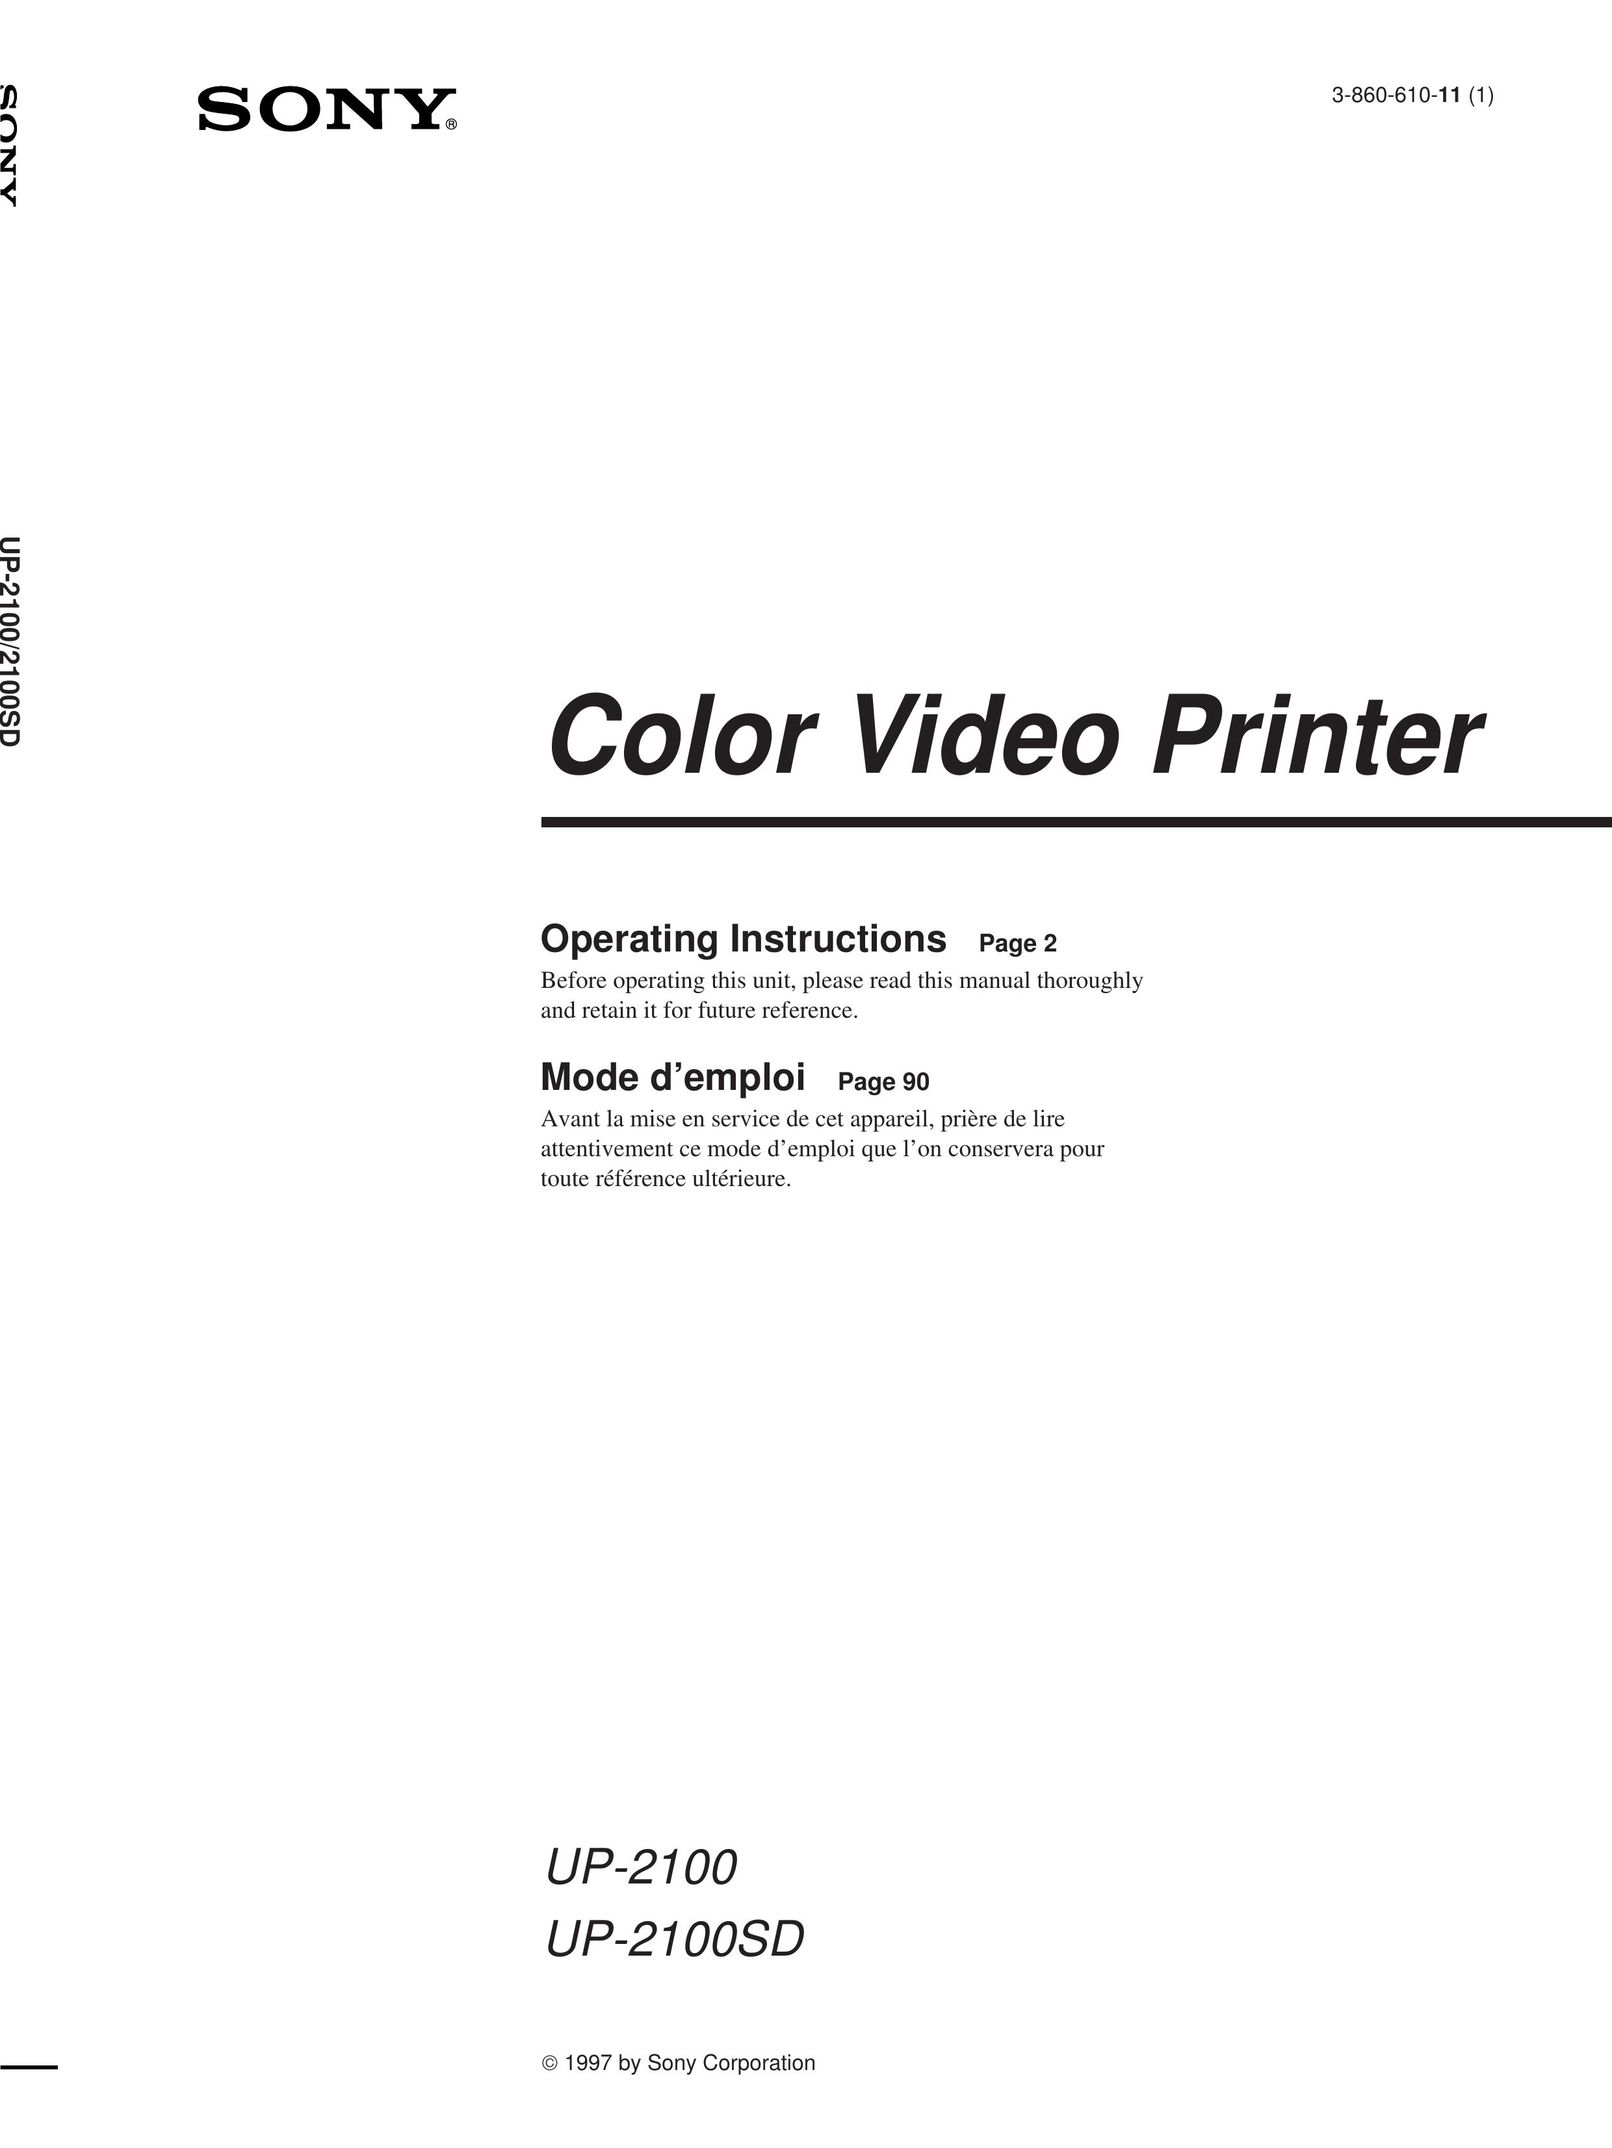 Sony UP-2100 Printer User Manual